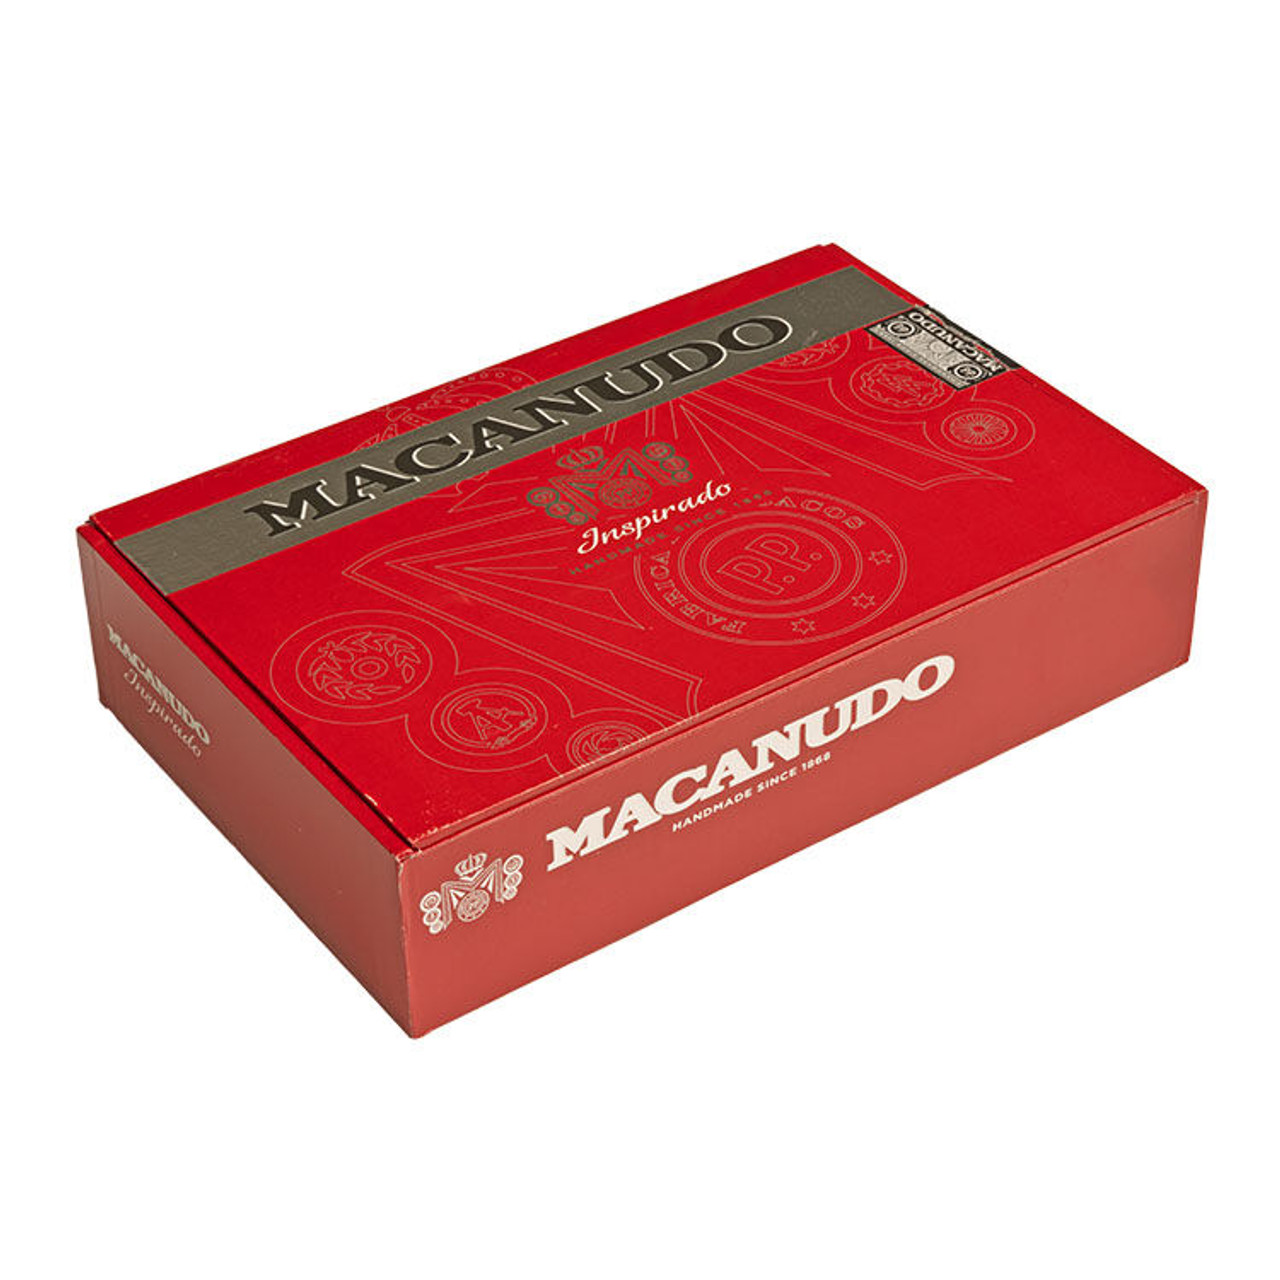 Macanudo Inspirado Red Robusto Round Cigars - 5 x 50 (Box of 20) *Box